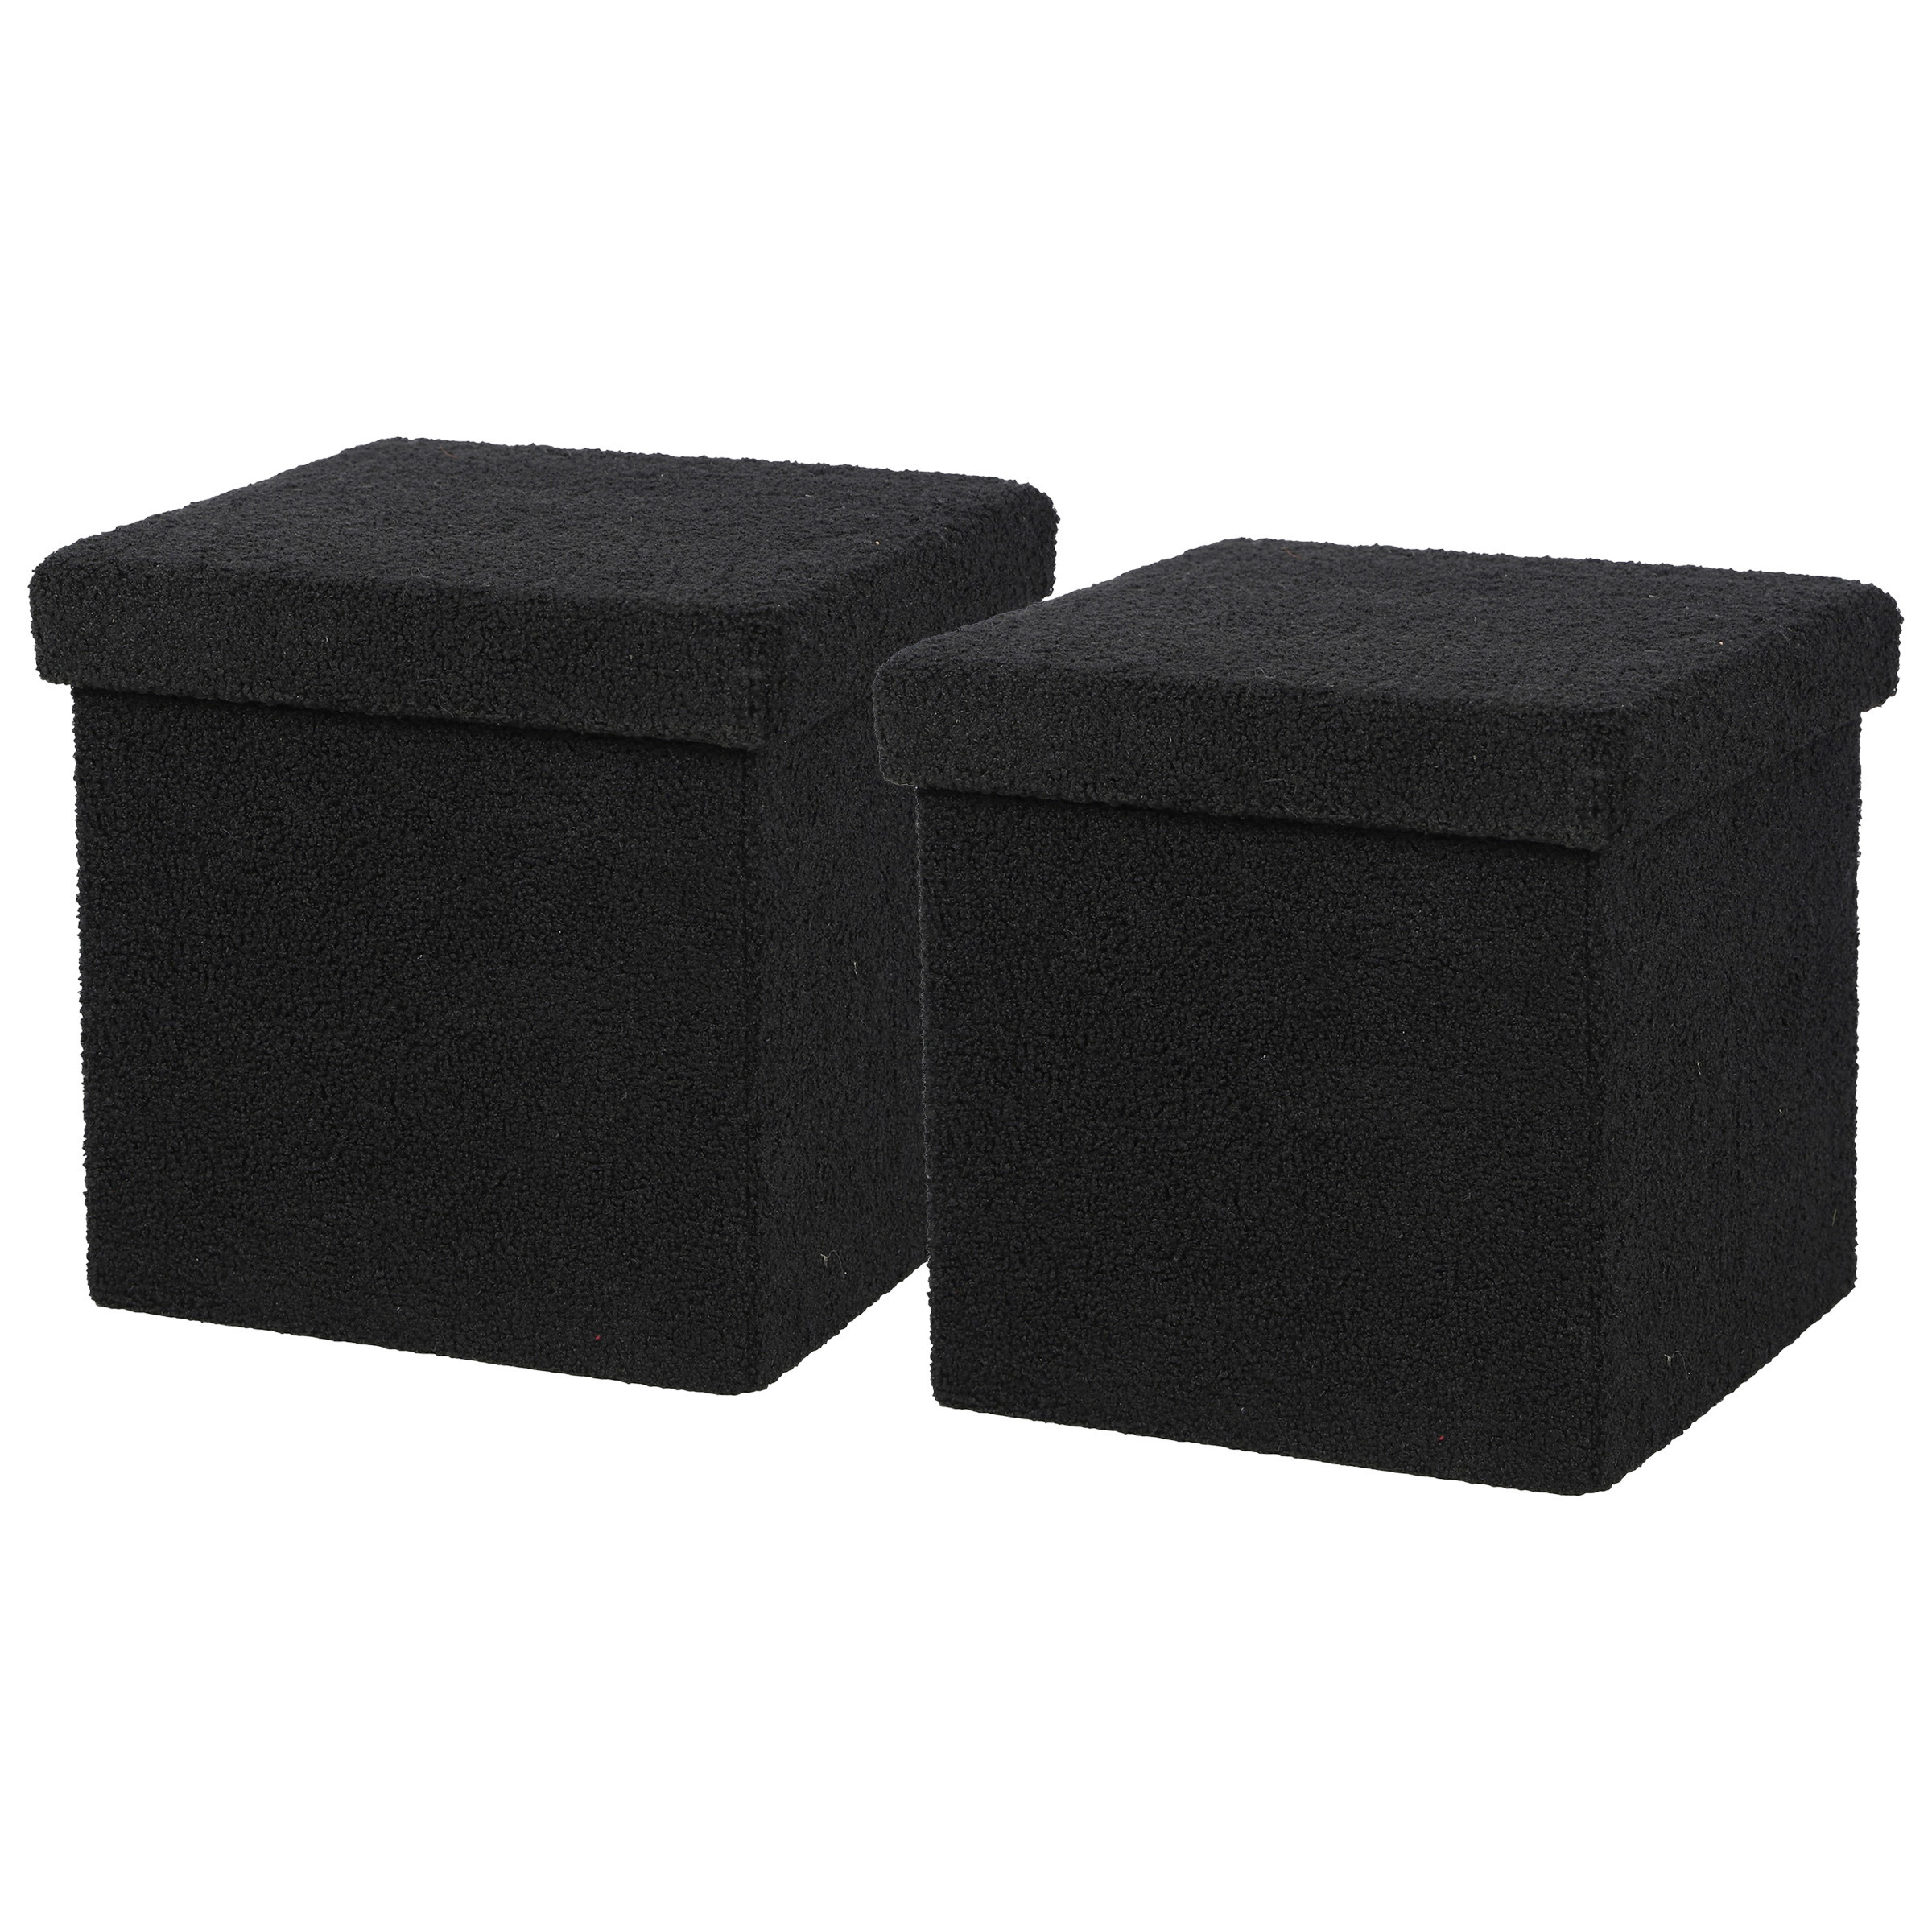 Poef Square BOX 2x hocker opbergbox zwart polyester-mdf 38 x 38 cm opvouwbaar